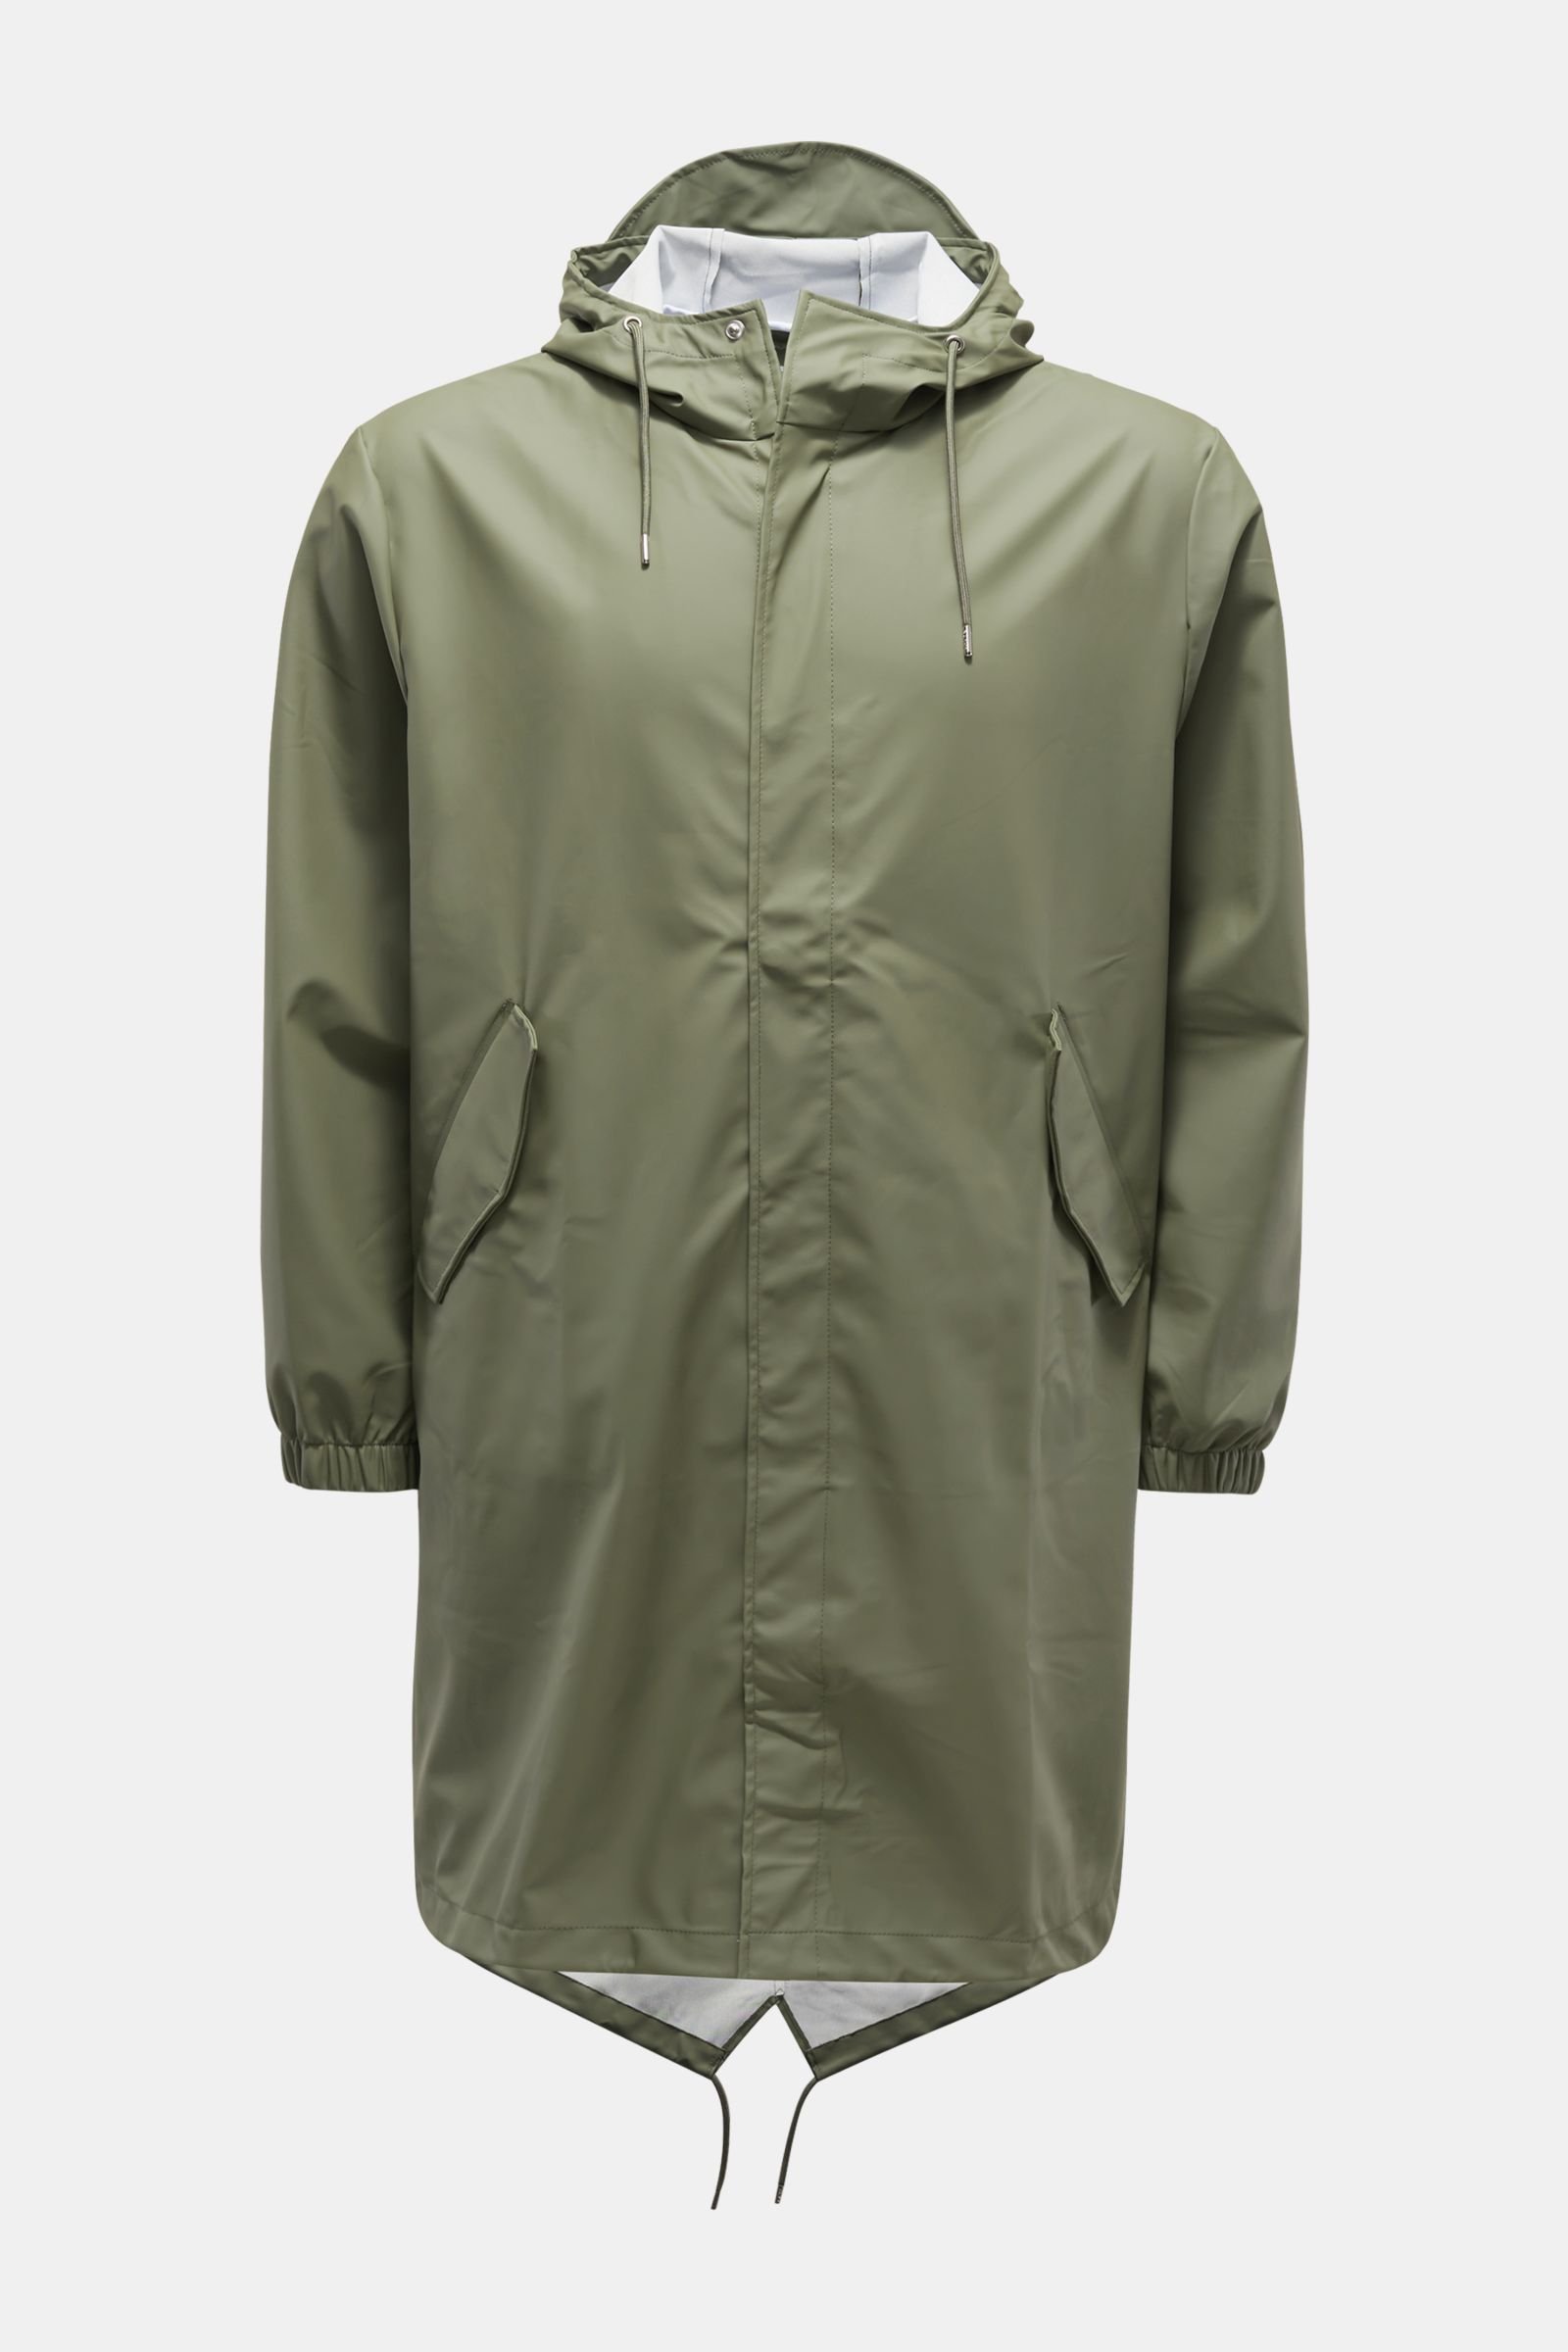 Rain coat 'Fishtail Parka' olive